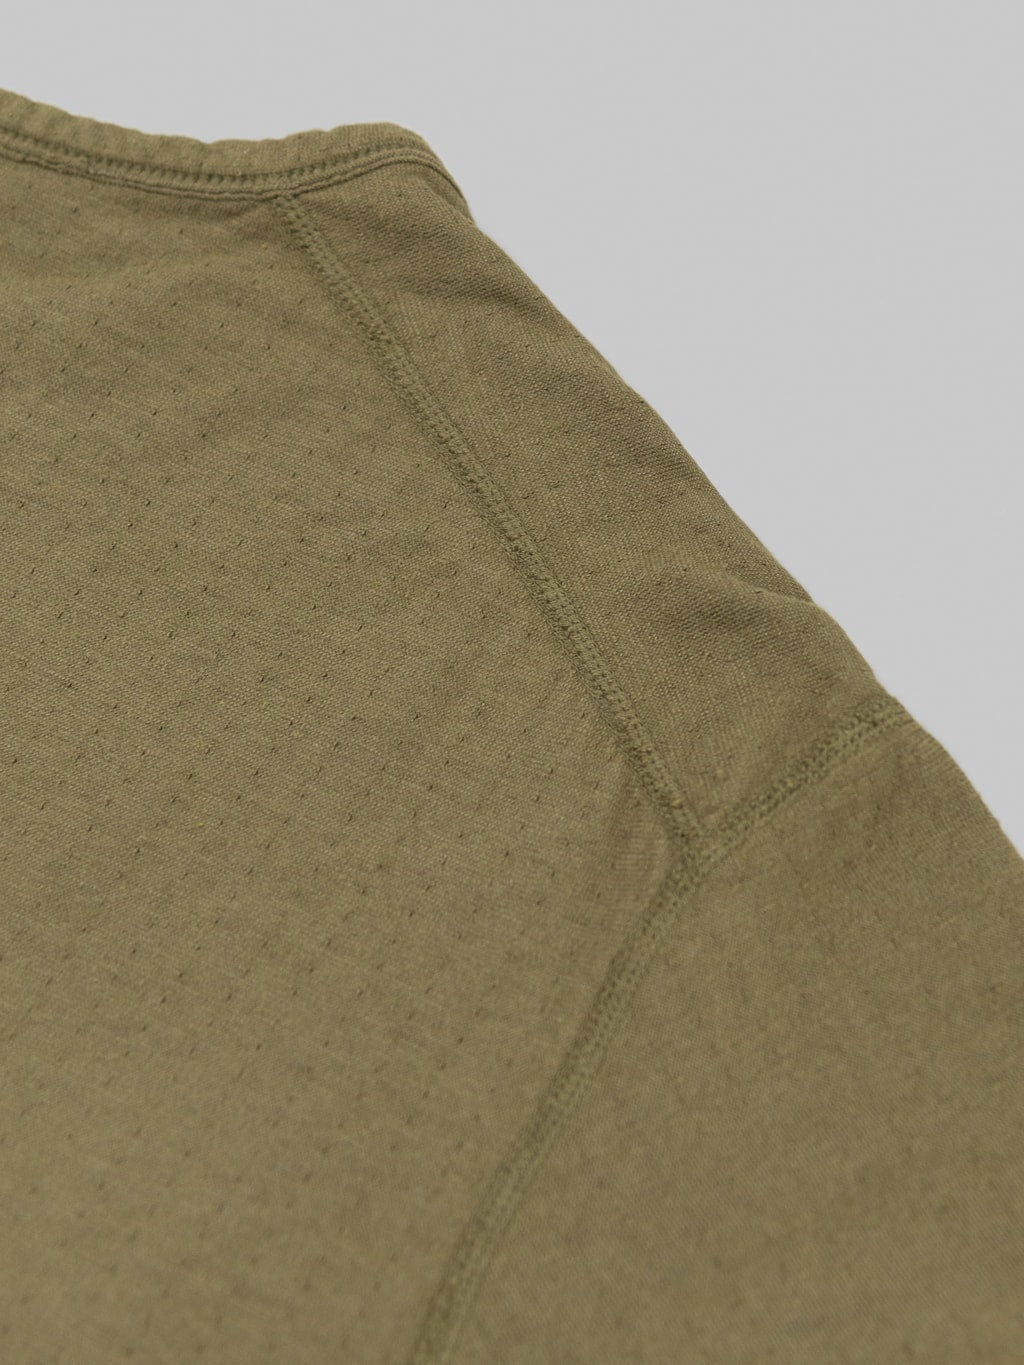 Loop and Weft Dual Layered Knit raw edge pocket TShirt olive seam